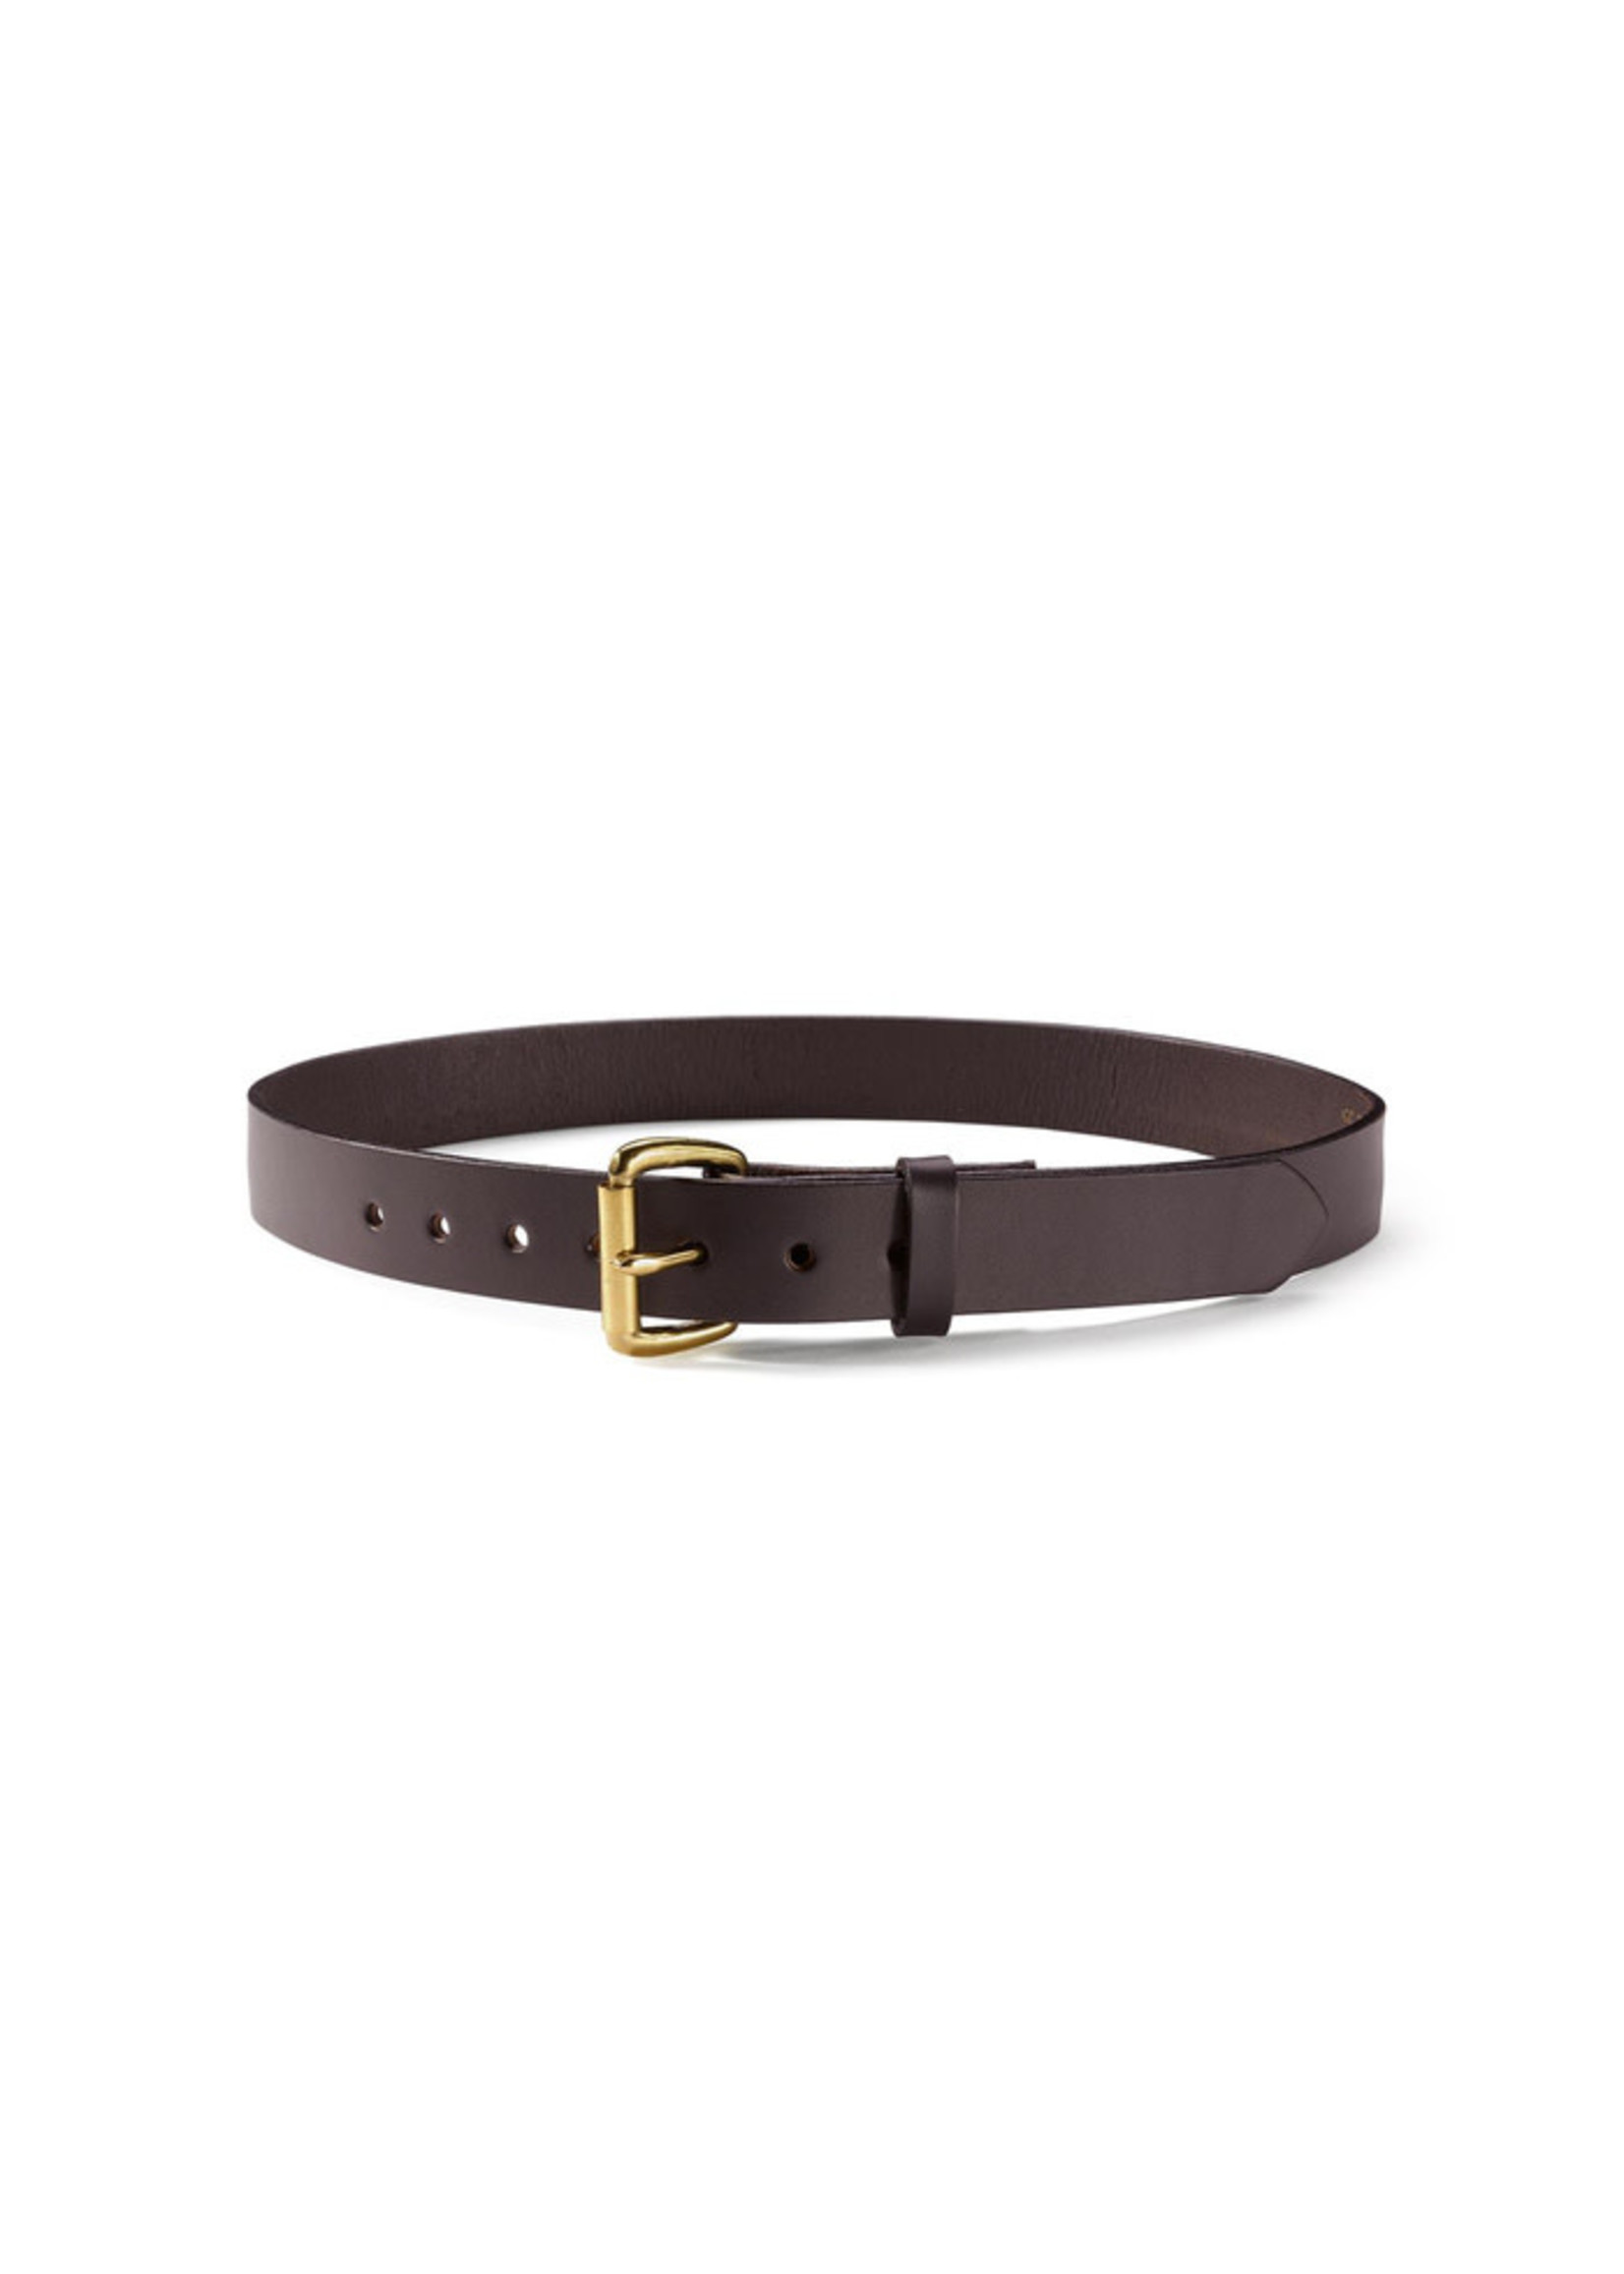 Filson 1-1/4 Leather Belt: Brown